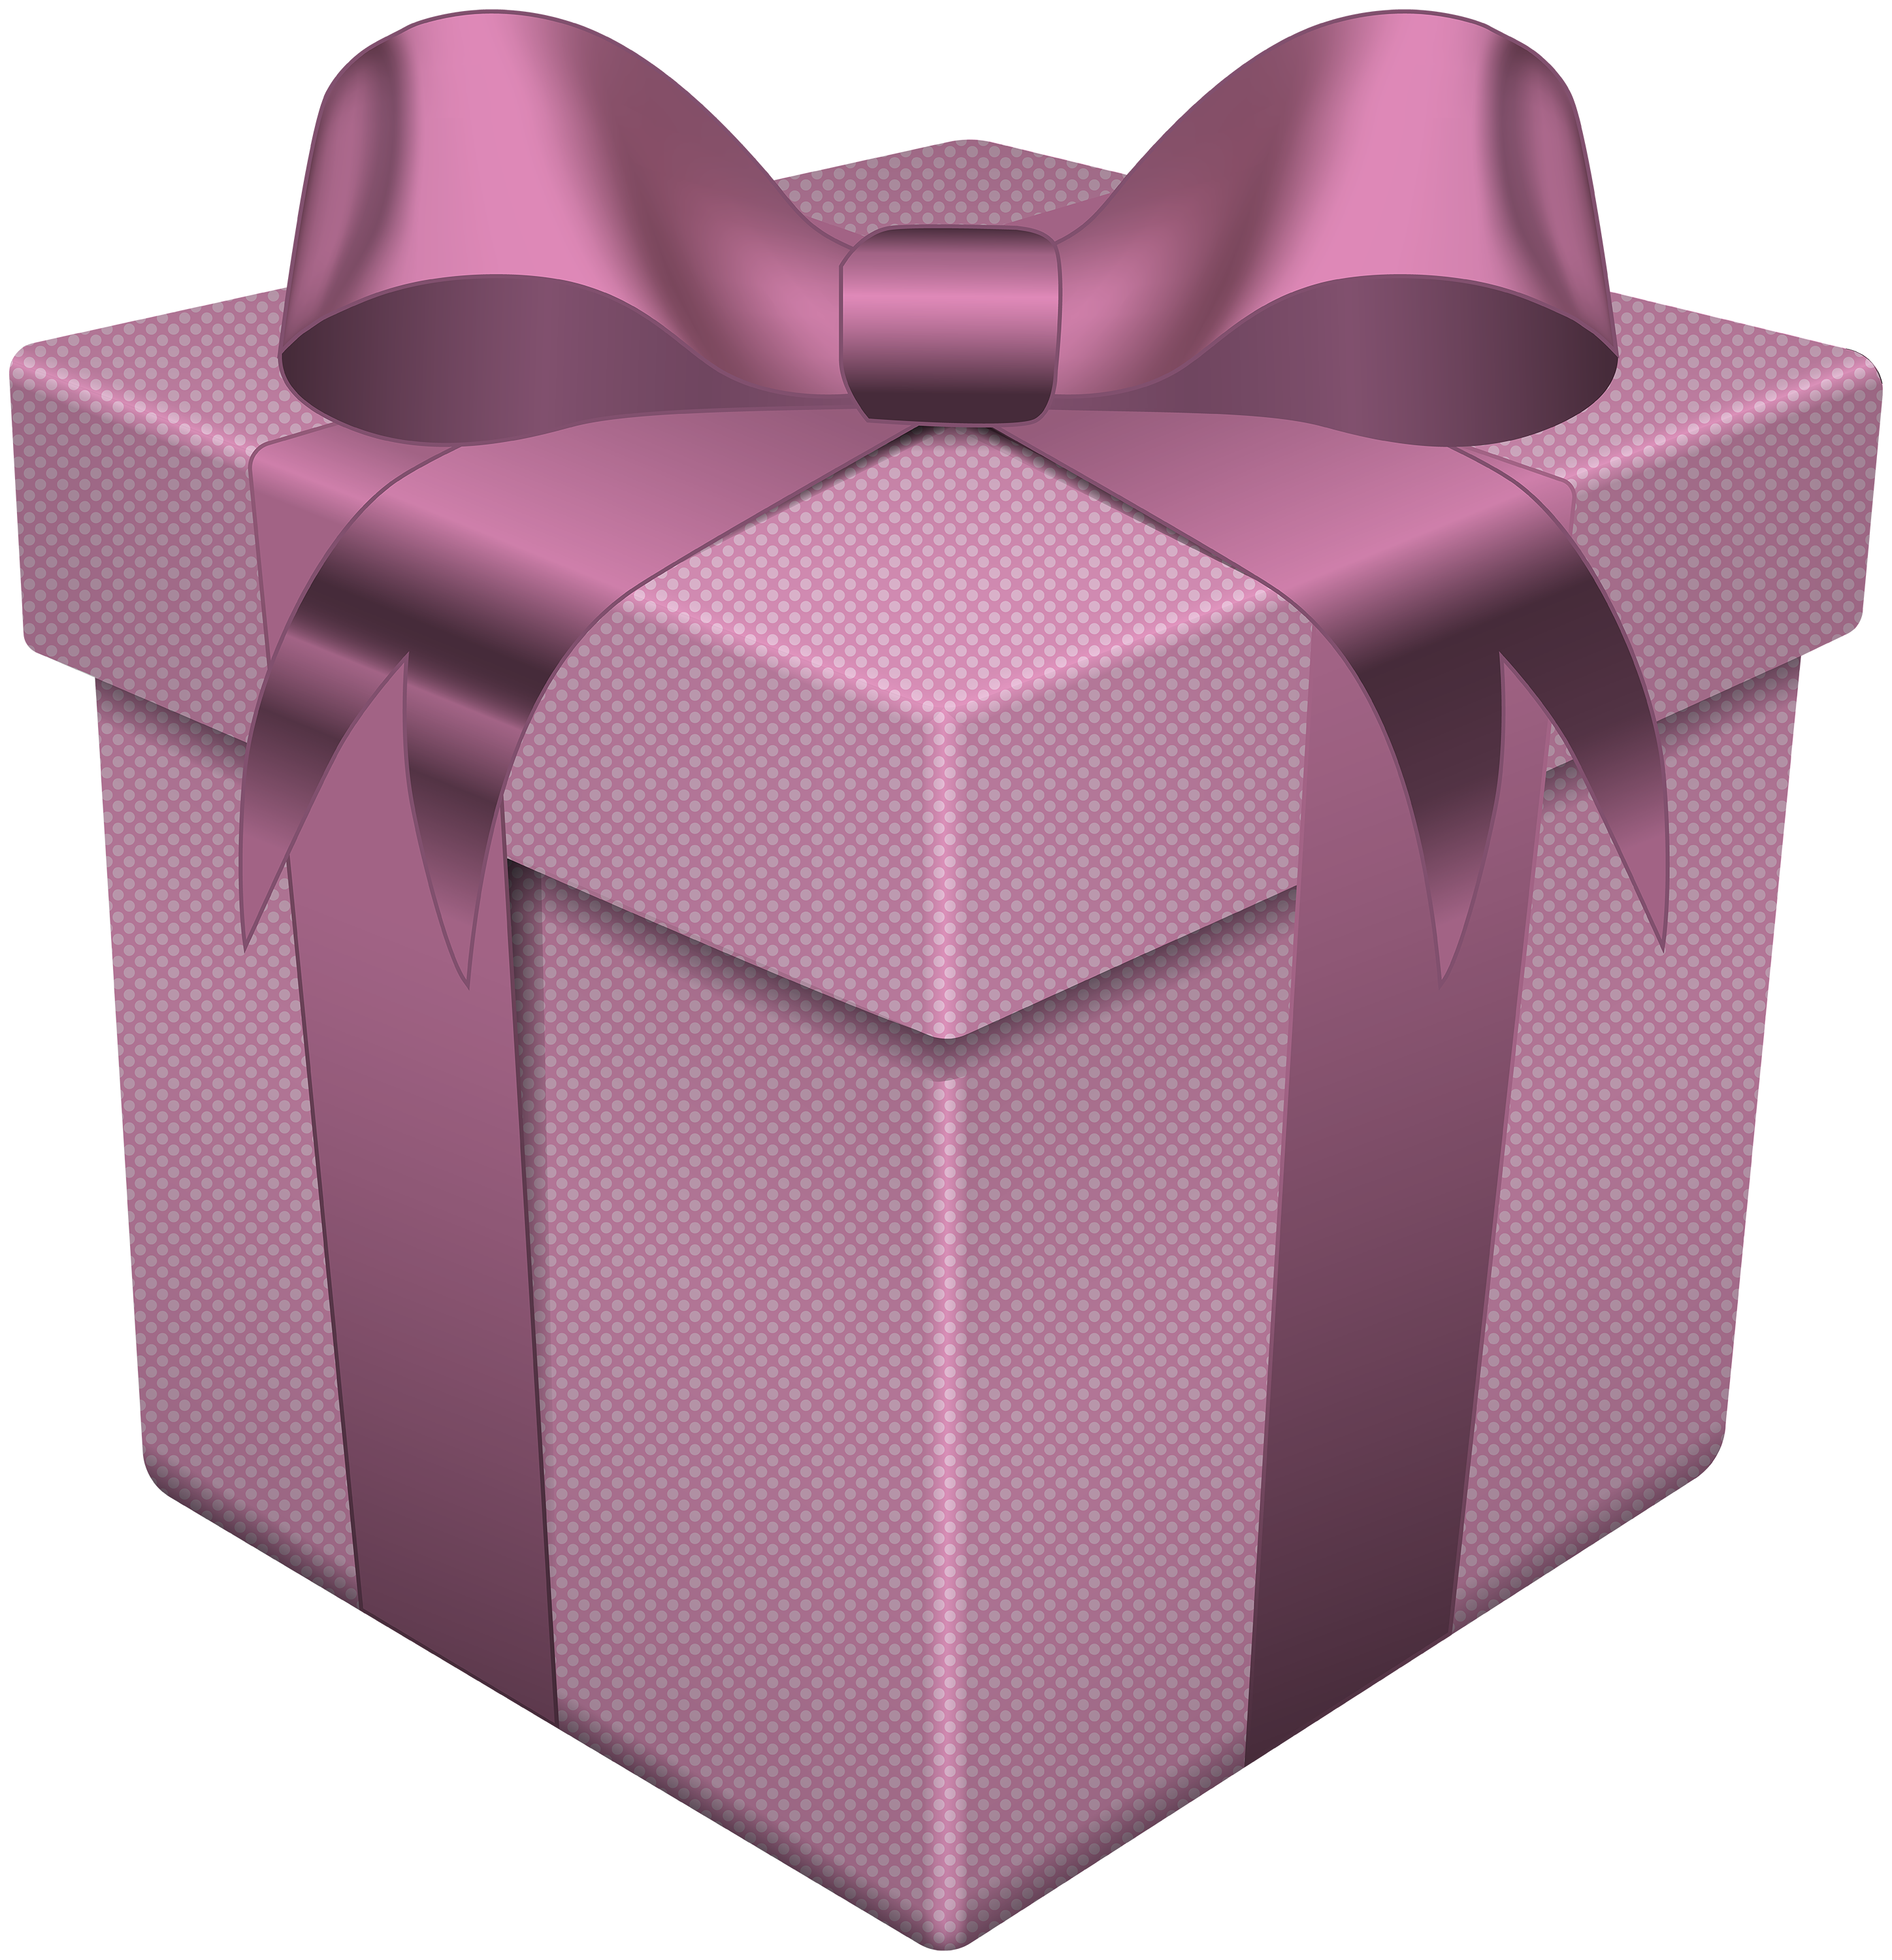 Gift Box Pink Transparent PNG Clip Art